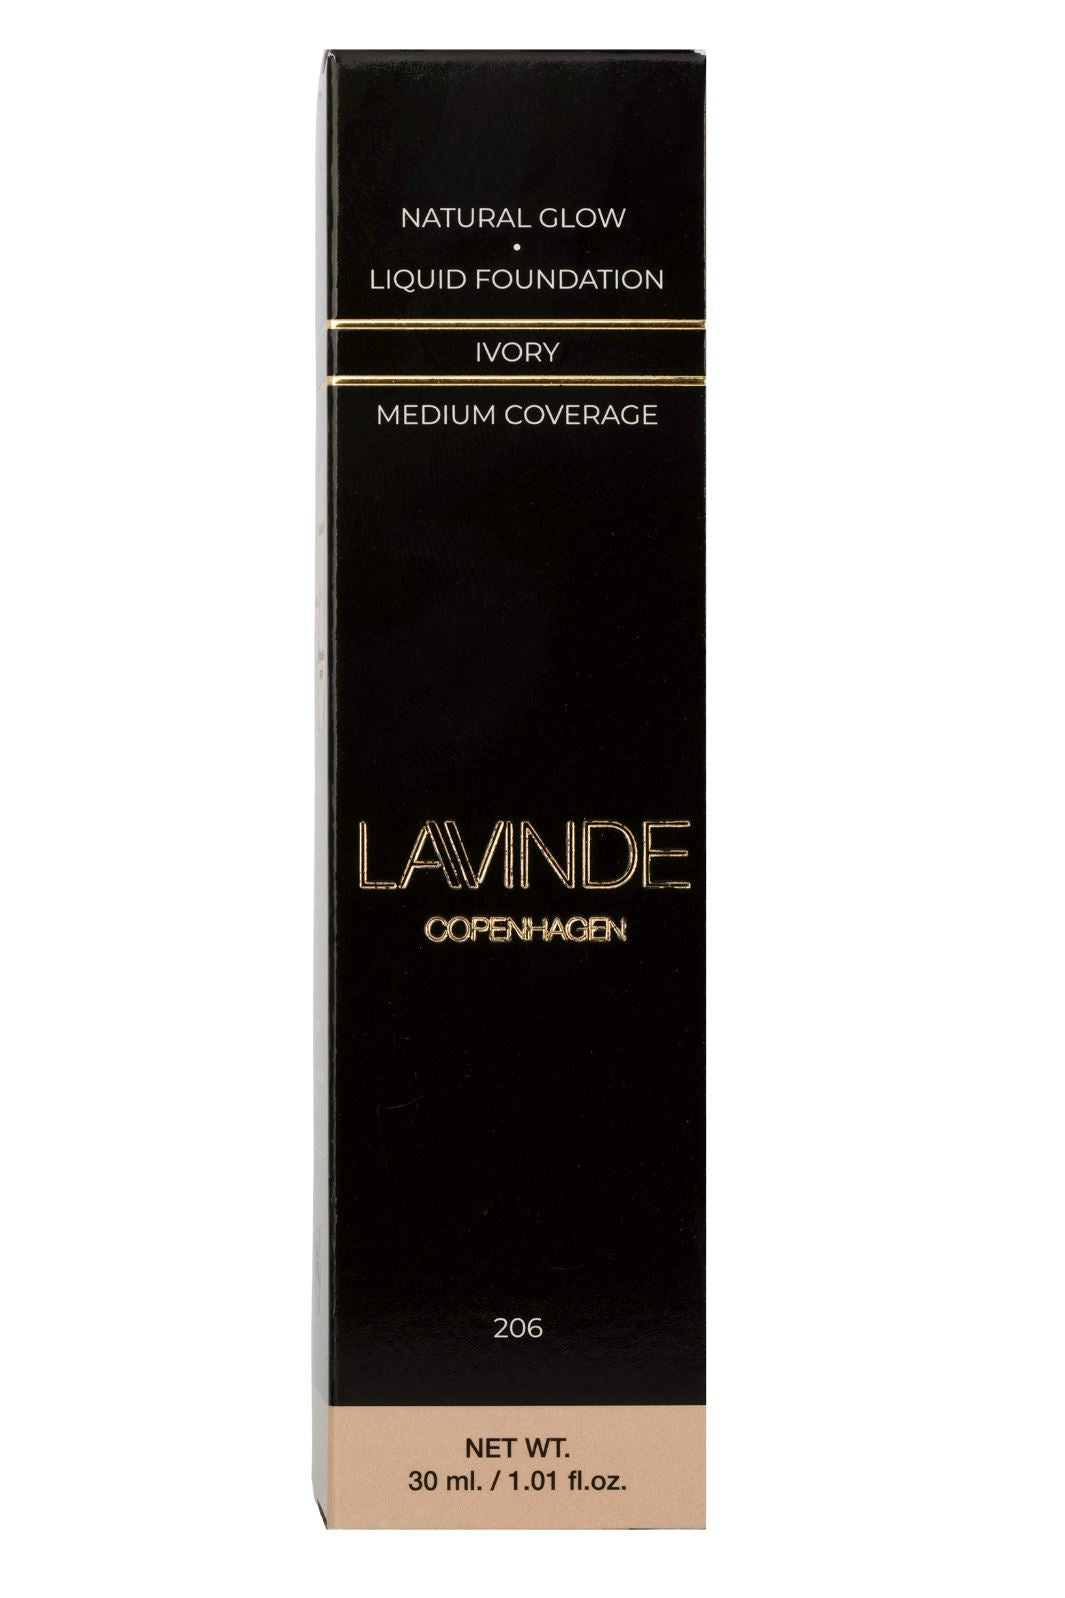 Lavinde Copenhagen - Natural Glow Liquid Foundation Ivory 206 - 30 ml Makeup 